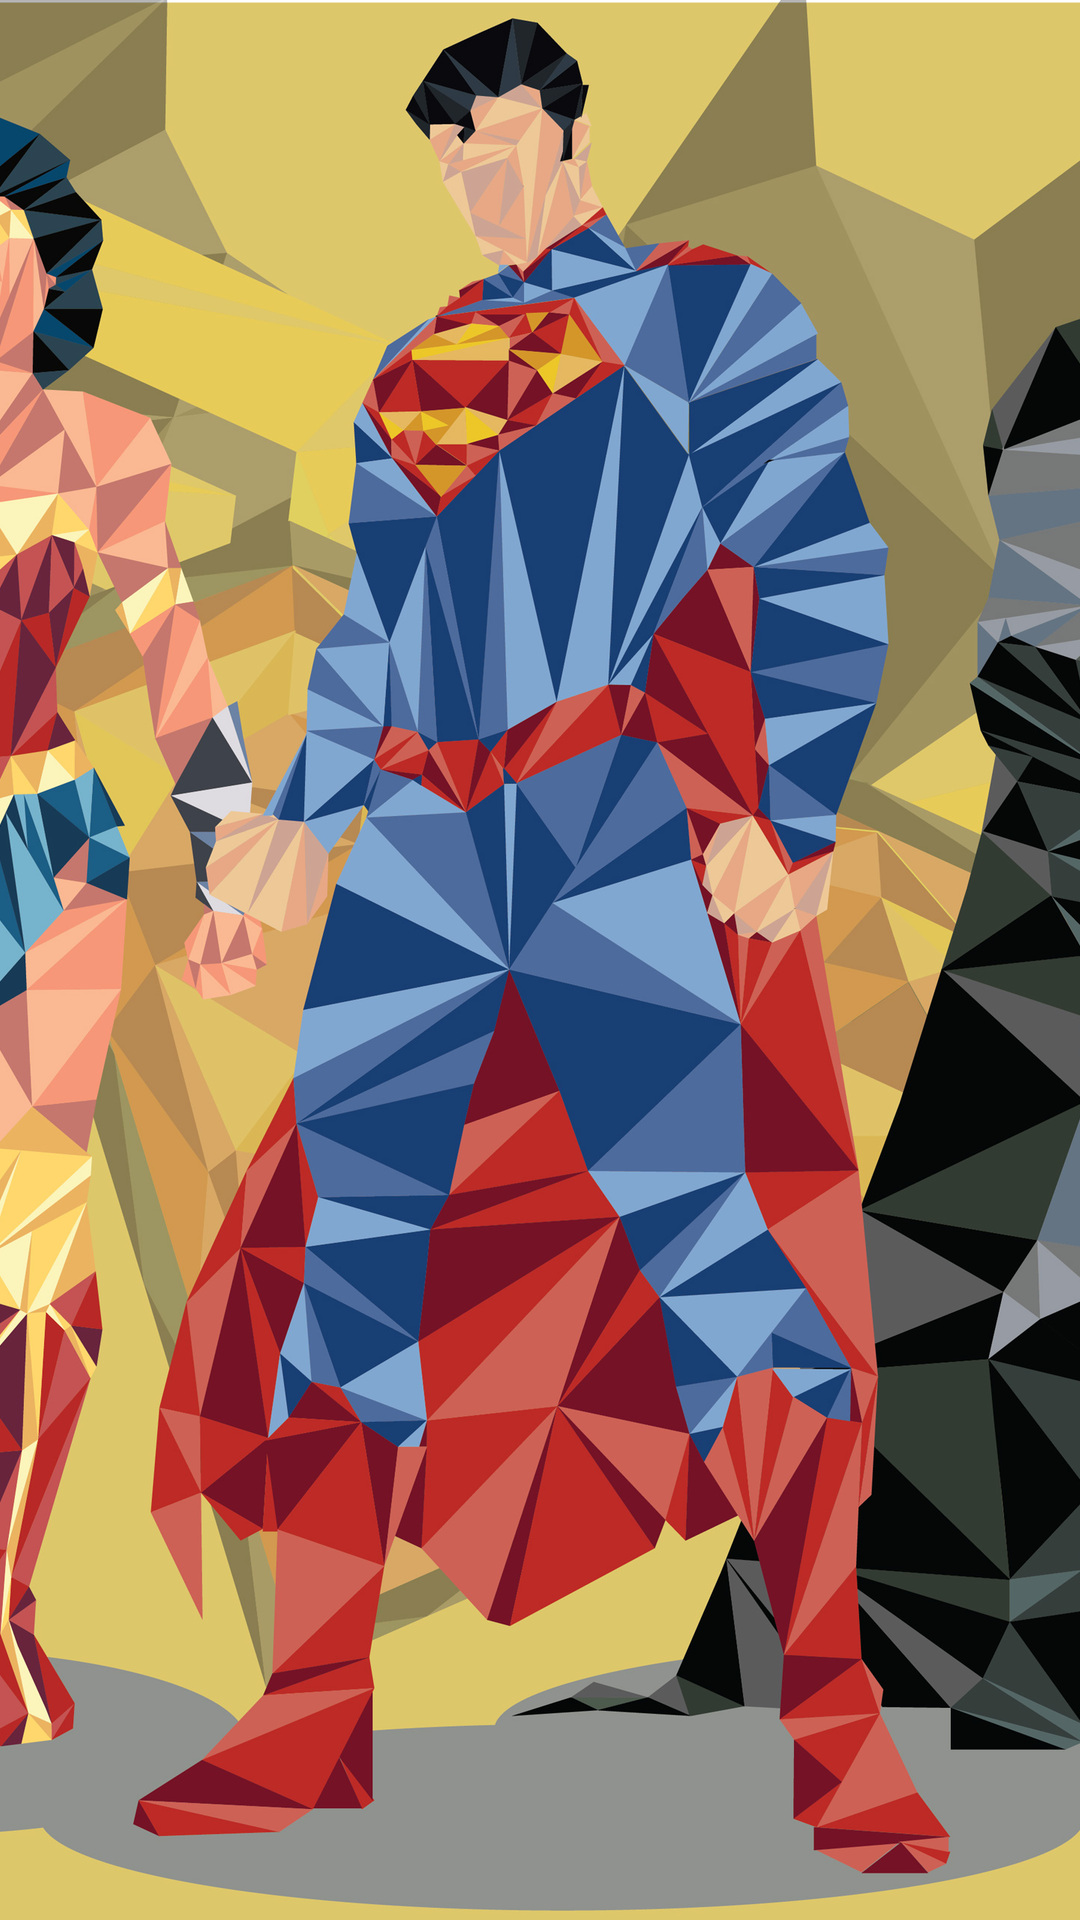 Wonder Woman Poly Art Wallpapers